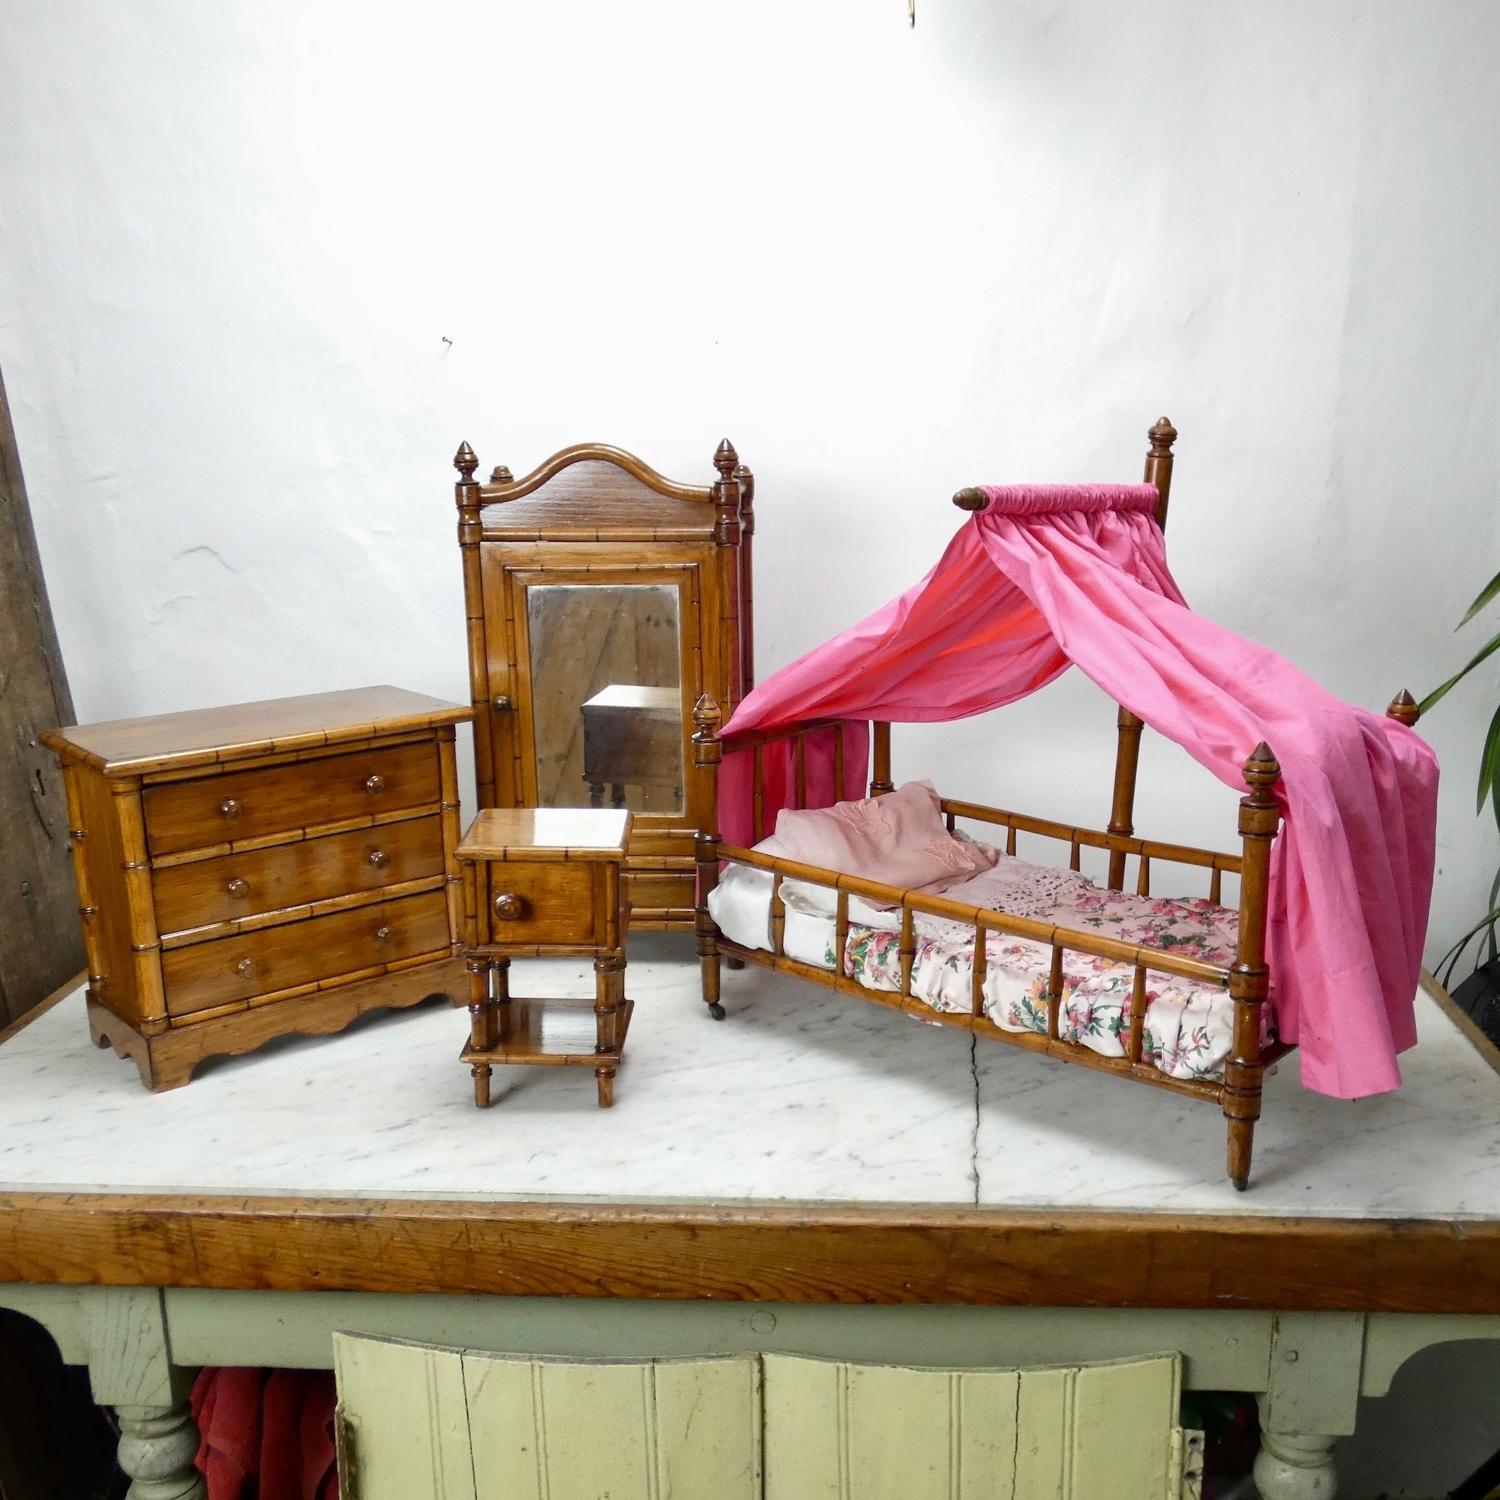 Doll's bedroom furniture